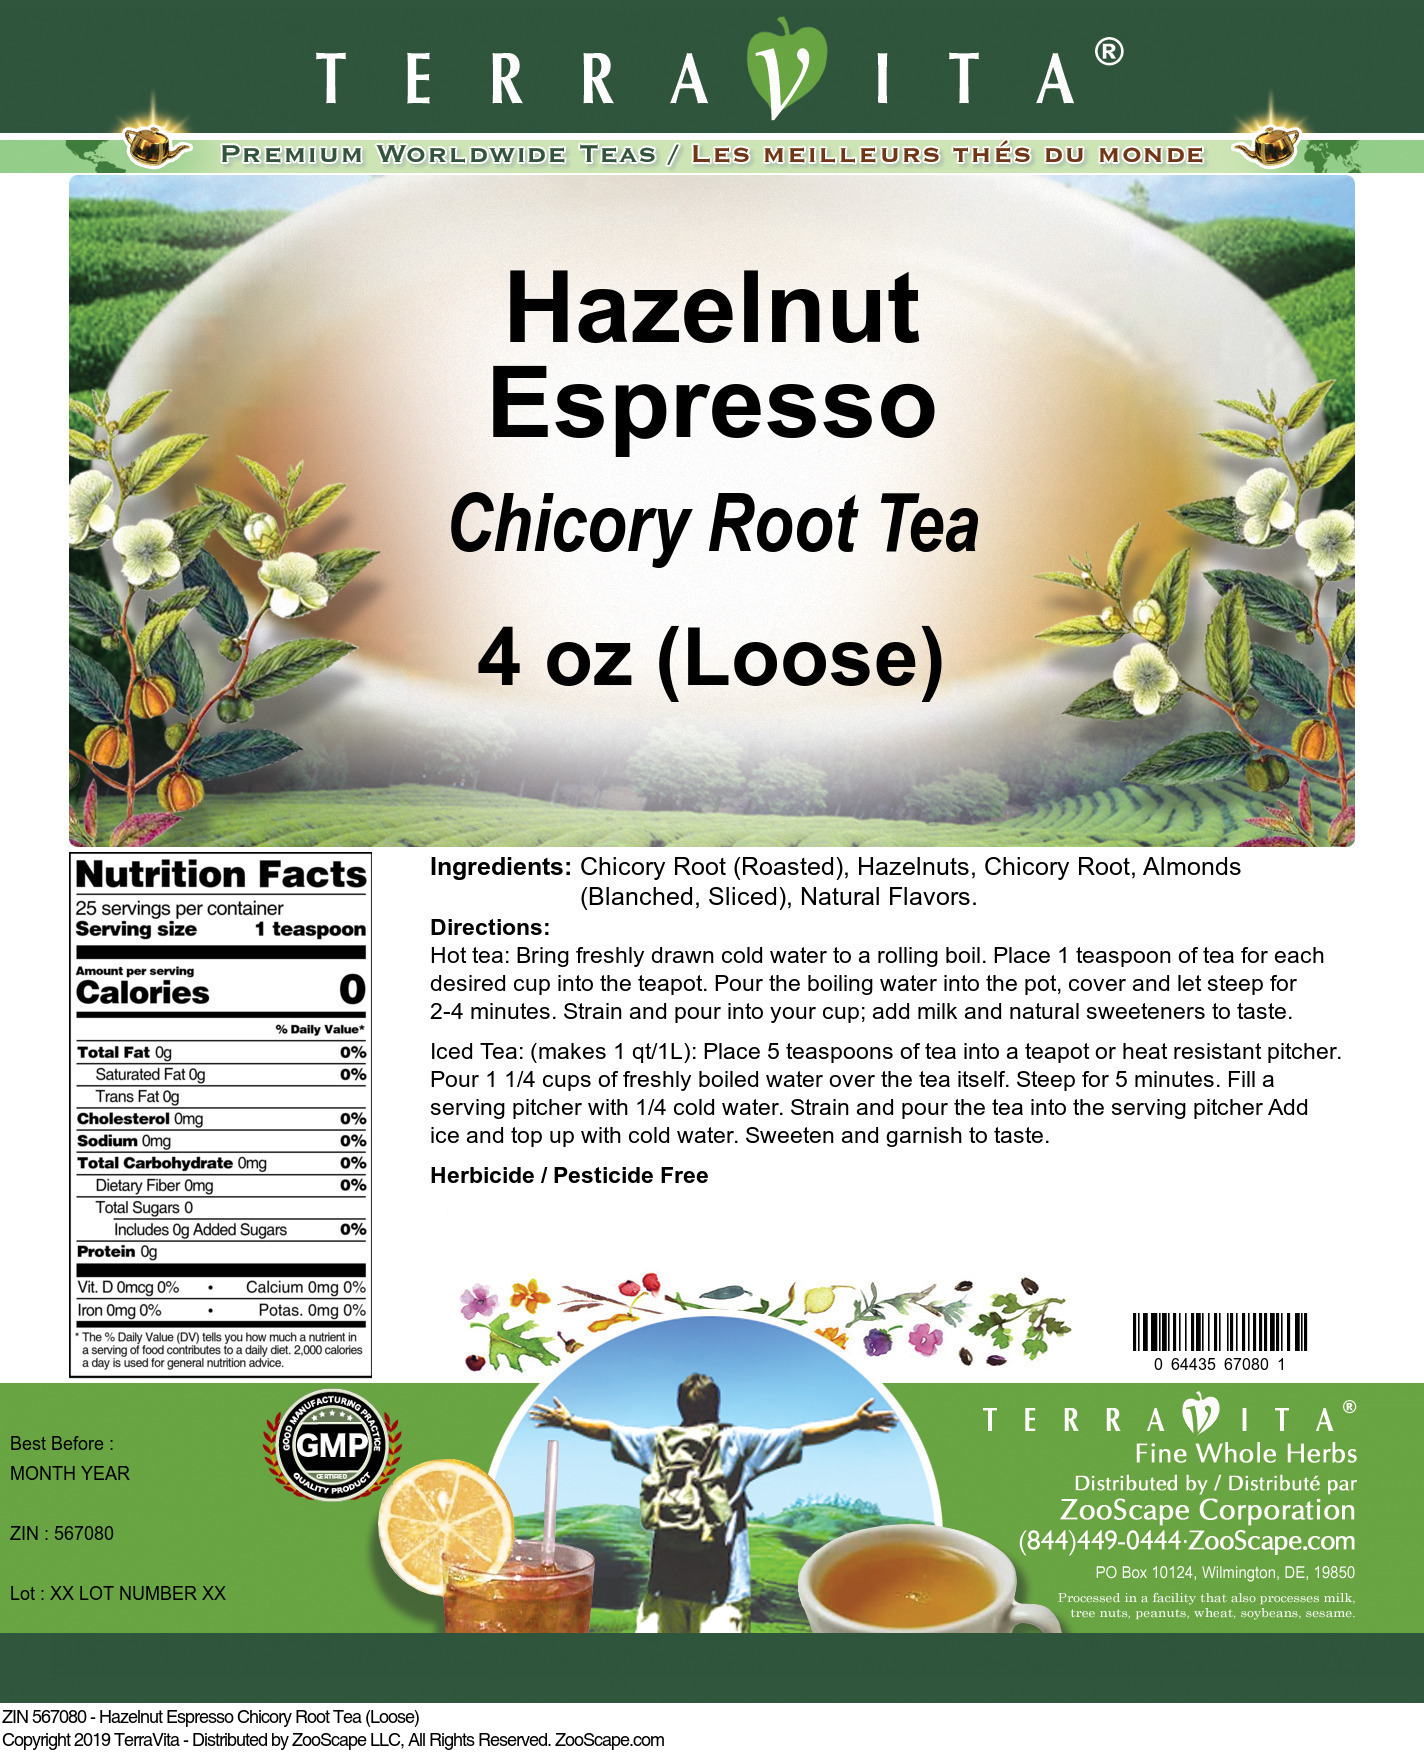 Hazelnut Espresso Chicory Root Tea (Loose) - Label